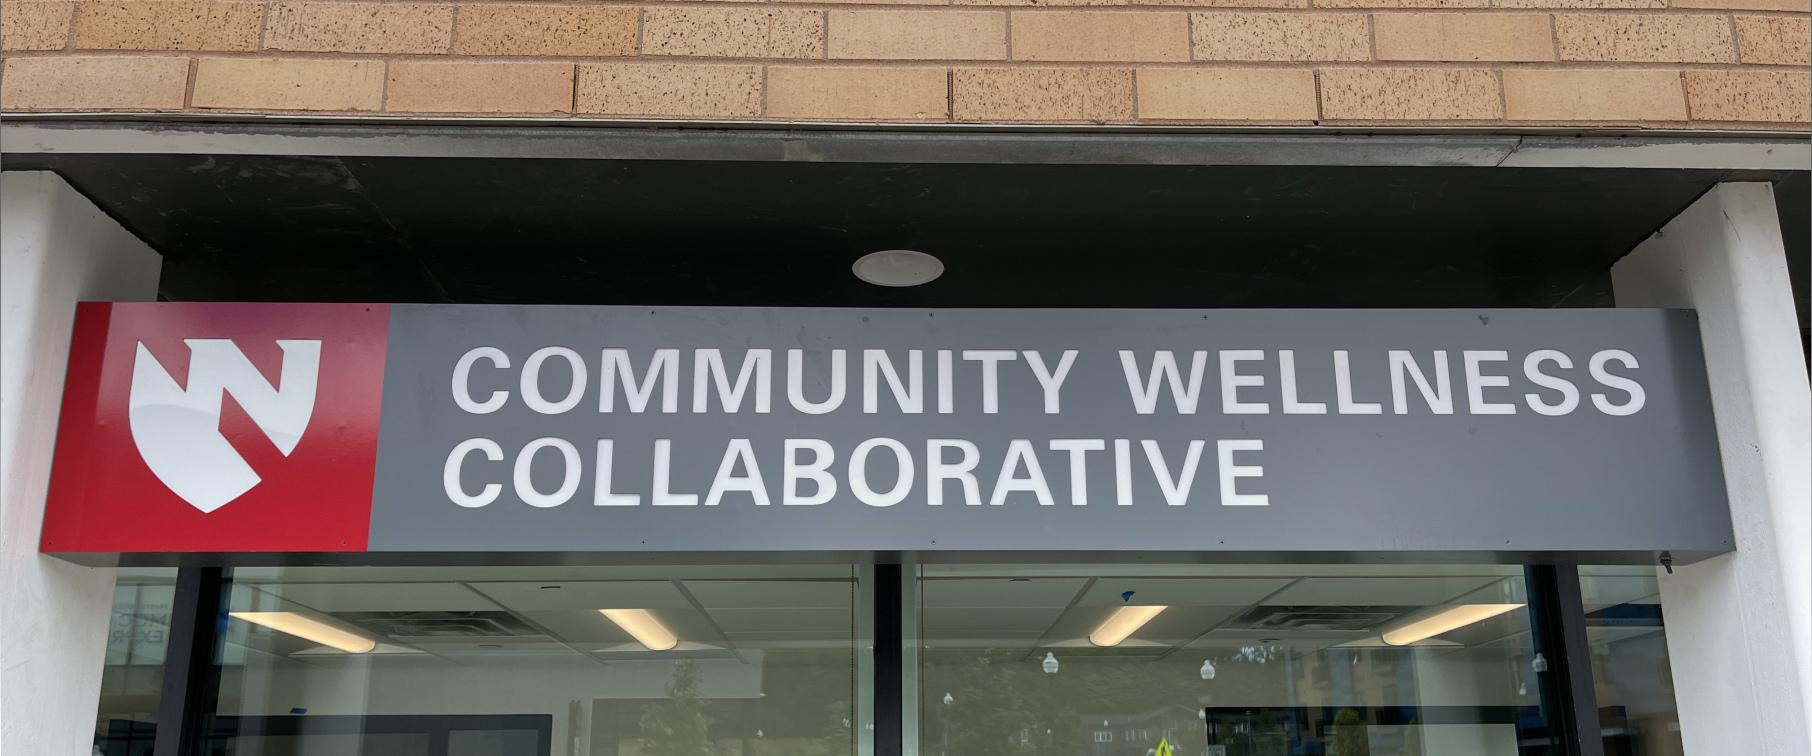 Community Wellness Collaborative External Sign